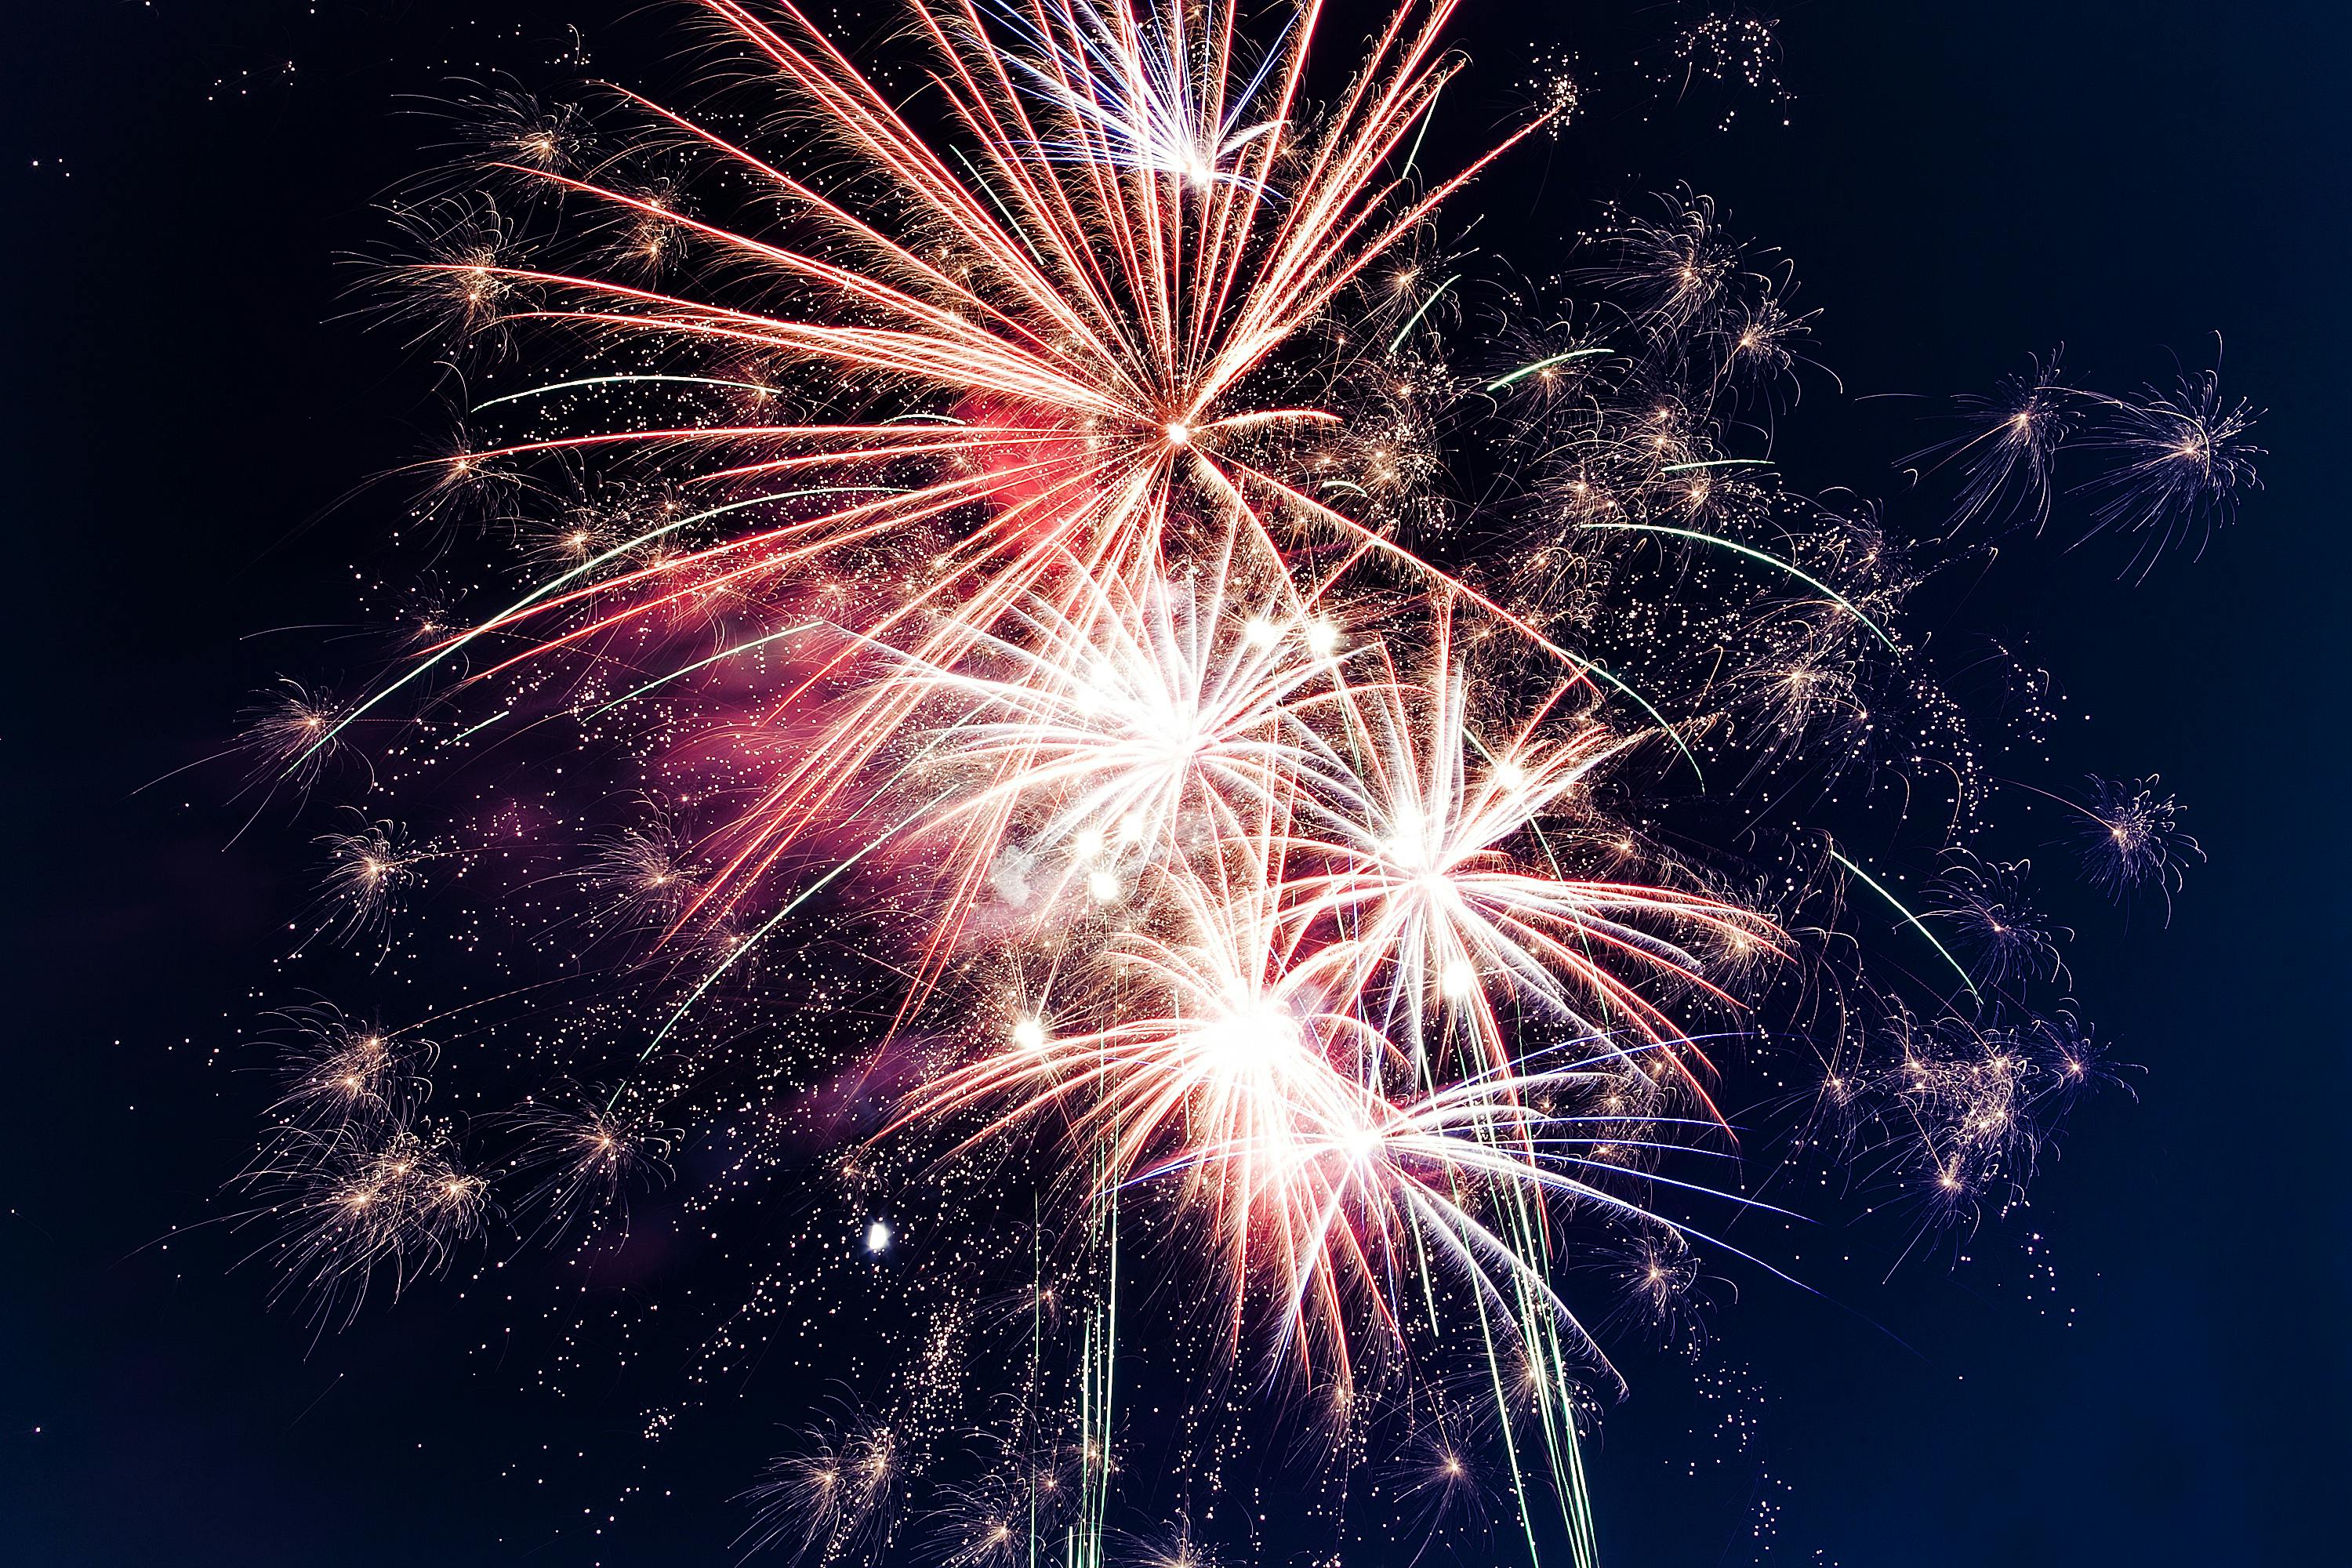 Fireworks at night | Source: Pexels